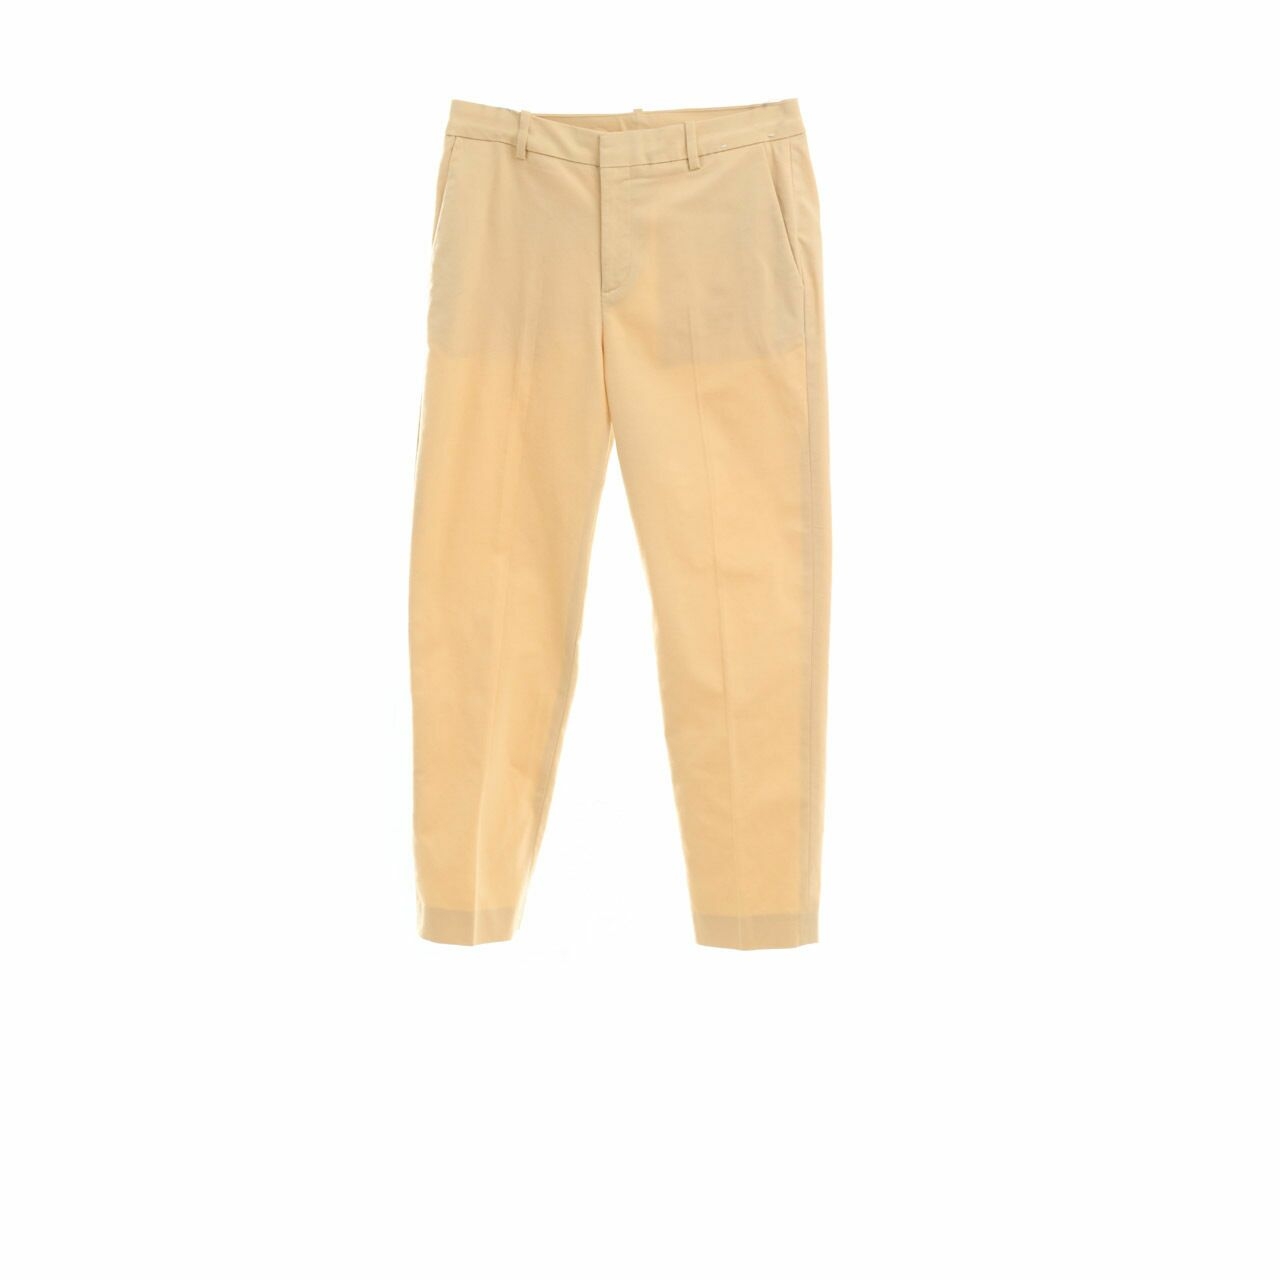 UNIQLO Yellow Trousers